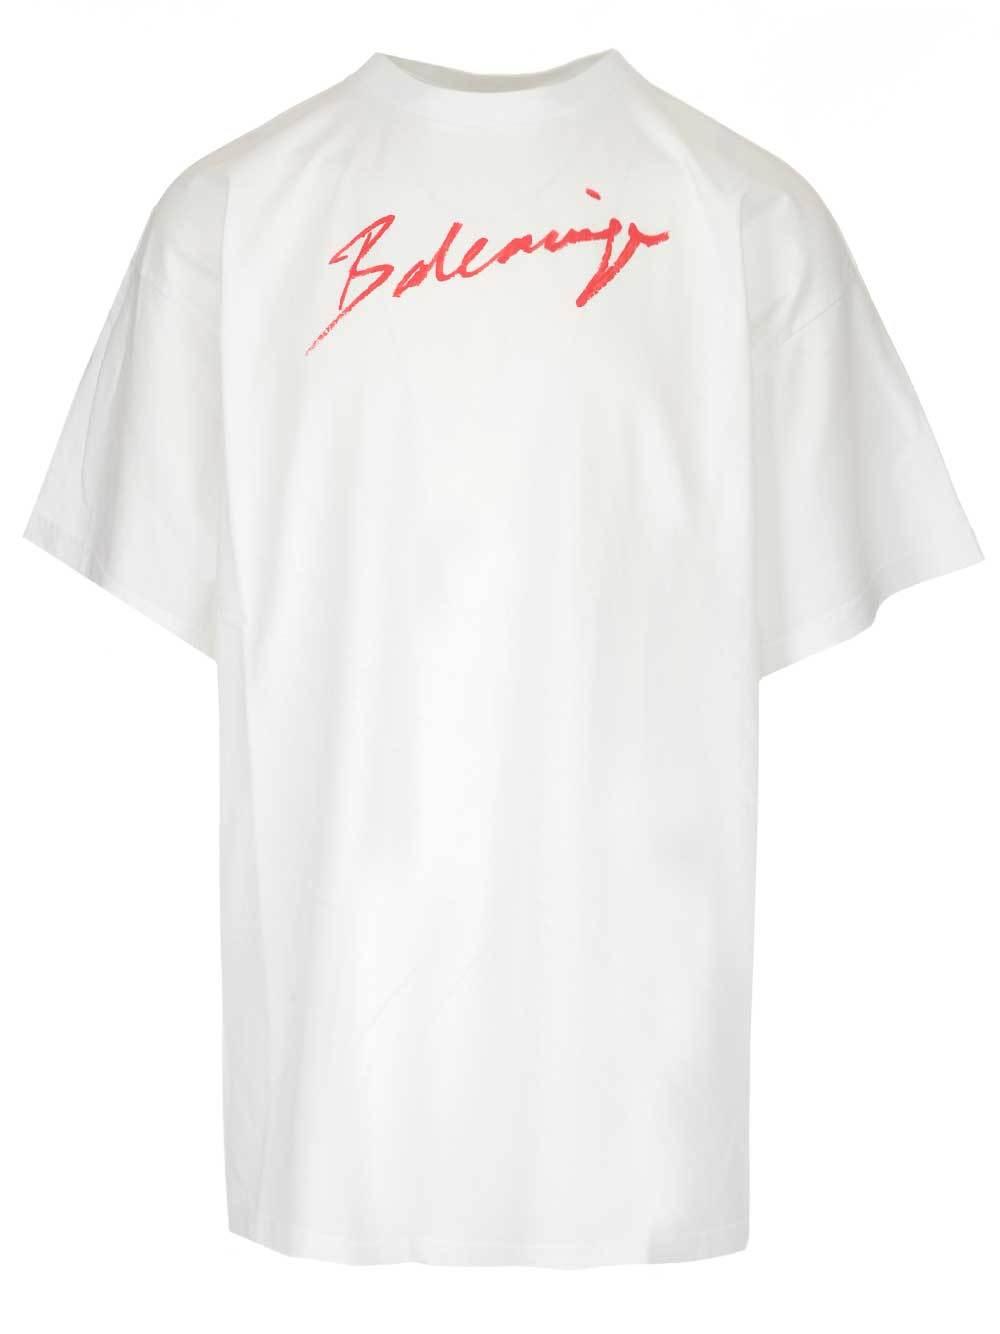 Balenciaga Cotton Script Logo Print T-shirt in White for Men - Lyst